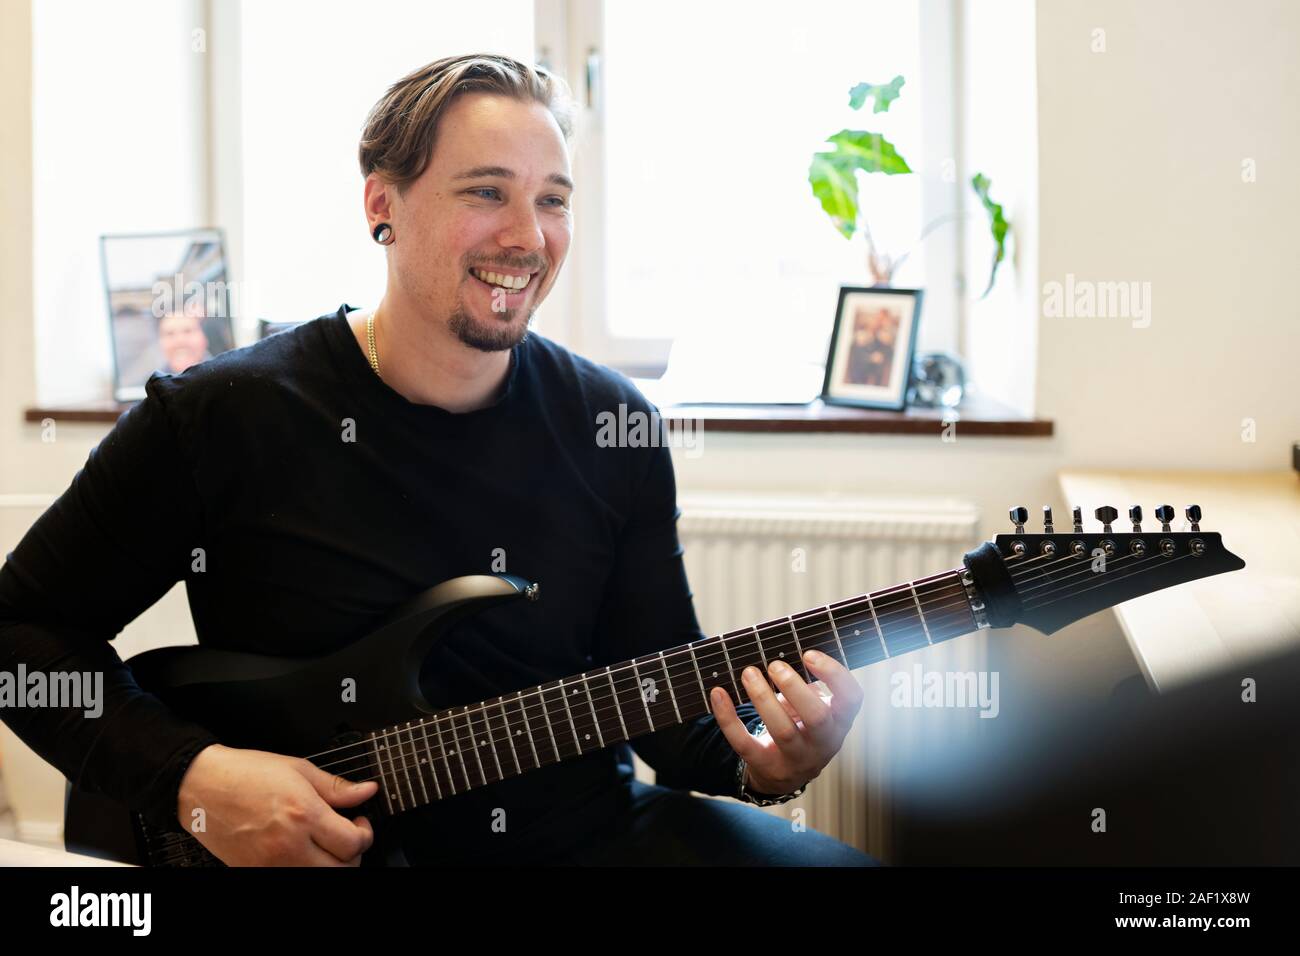 Smiling man playing electric guitar Stock Photo